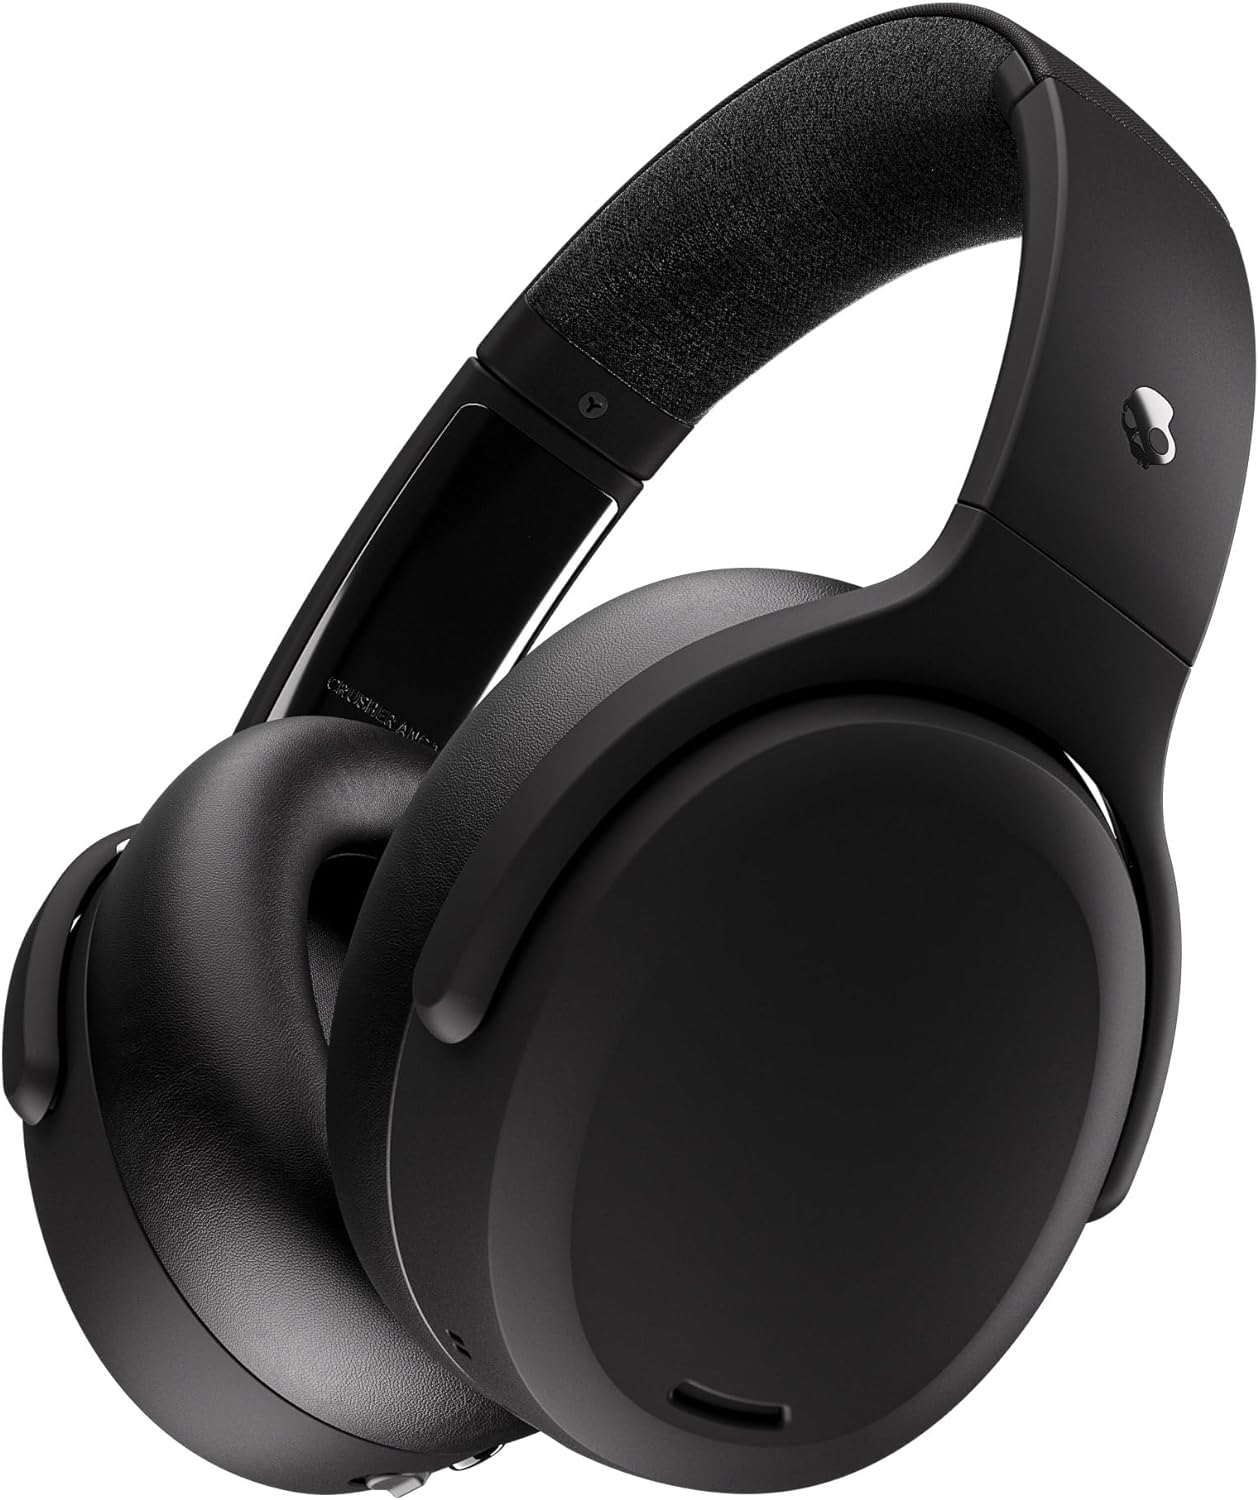 $172.99: Skullcandy Crusher ANC 2 Over-Ear Noise Cancelling Wireless Headphones Amazon